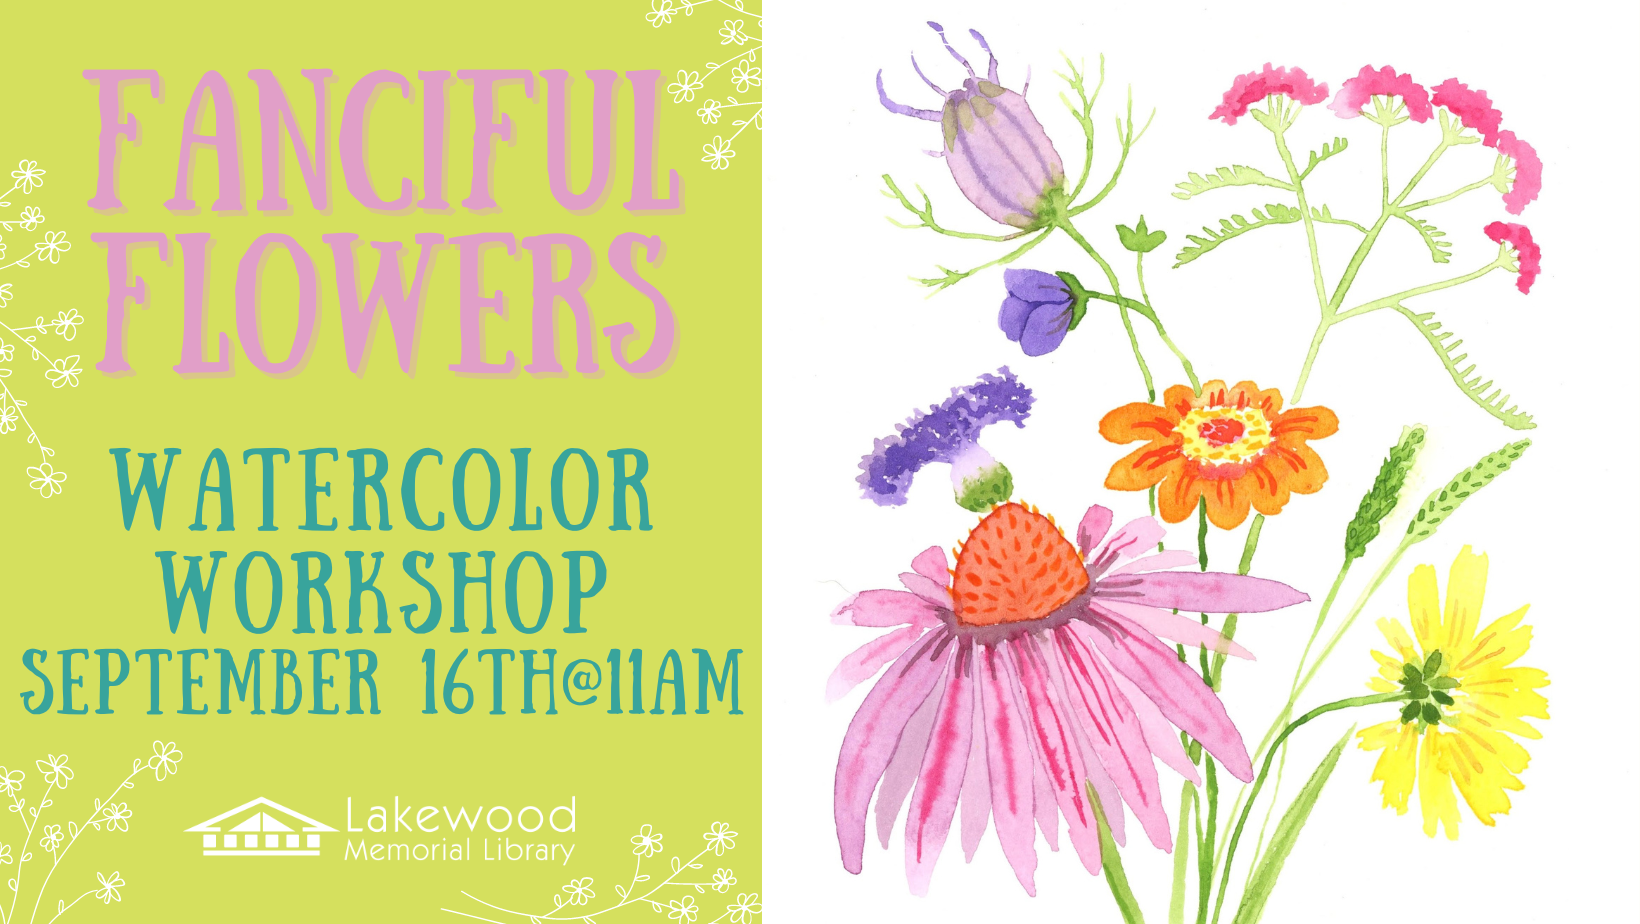 Fanciful Flowers Watercolor Workshop